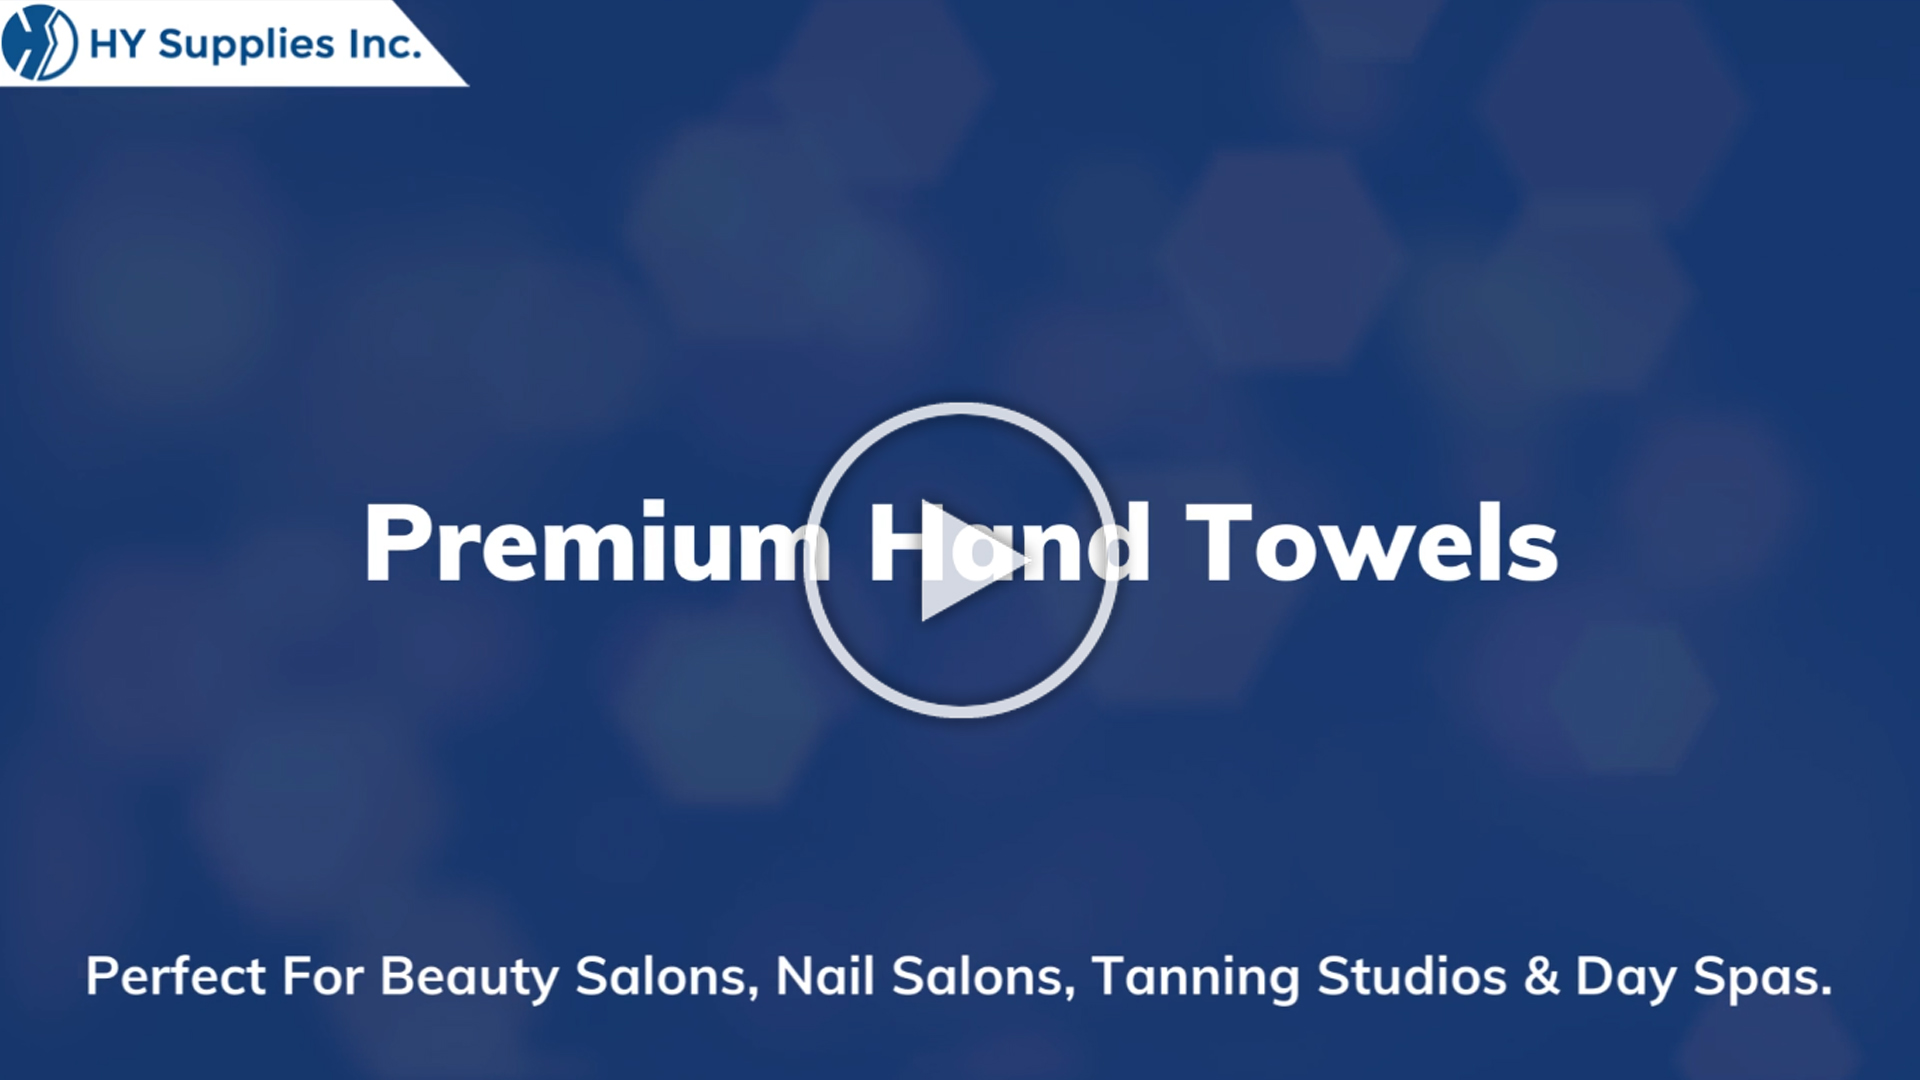 Premium Hand Towels